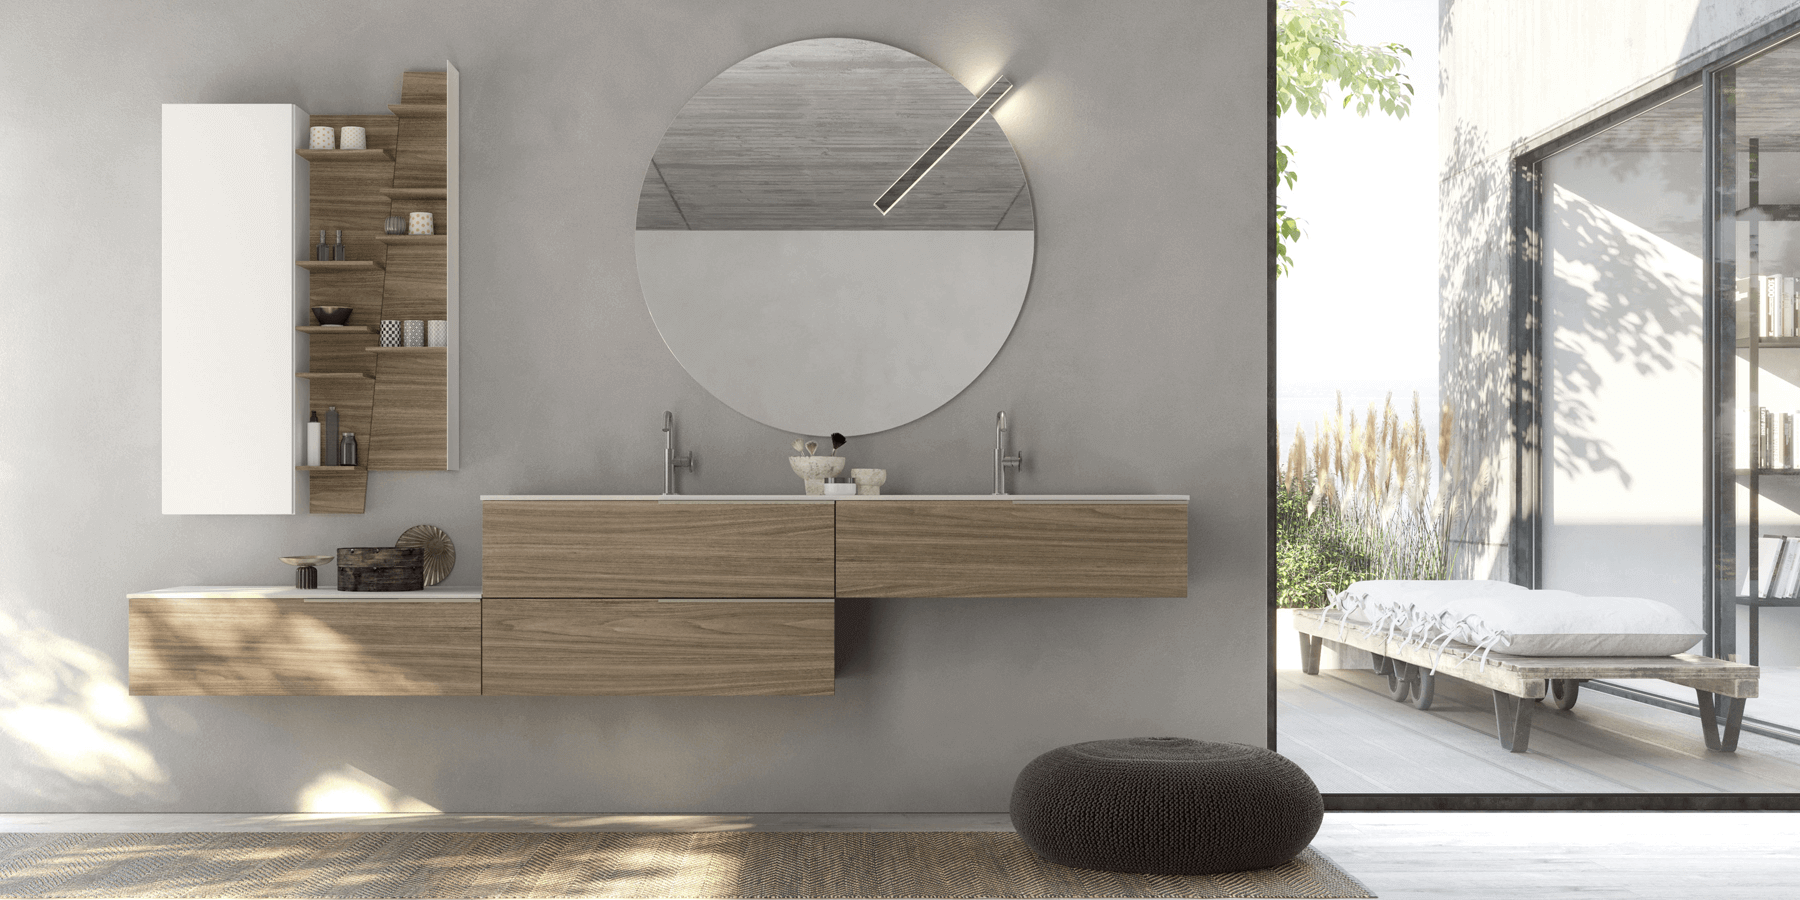 Asymmetric bathroom vanity and wall storage